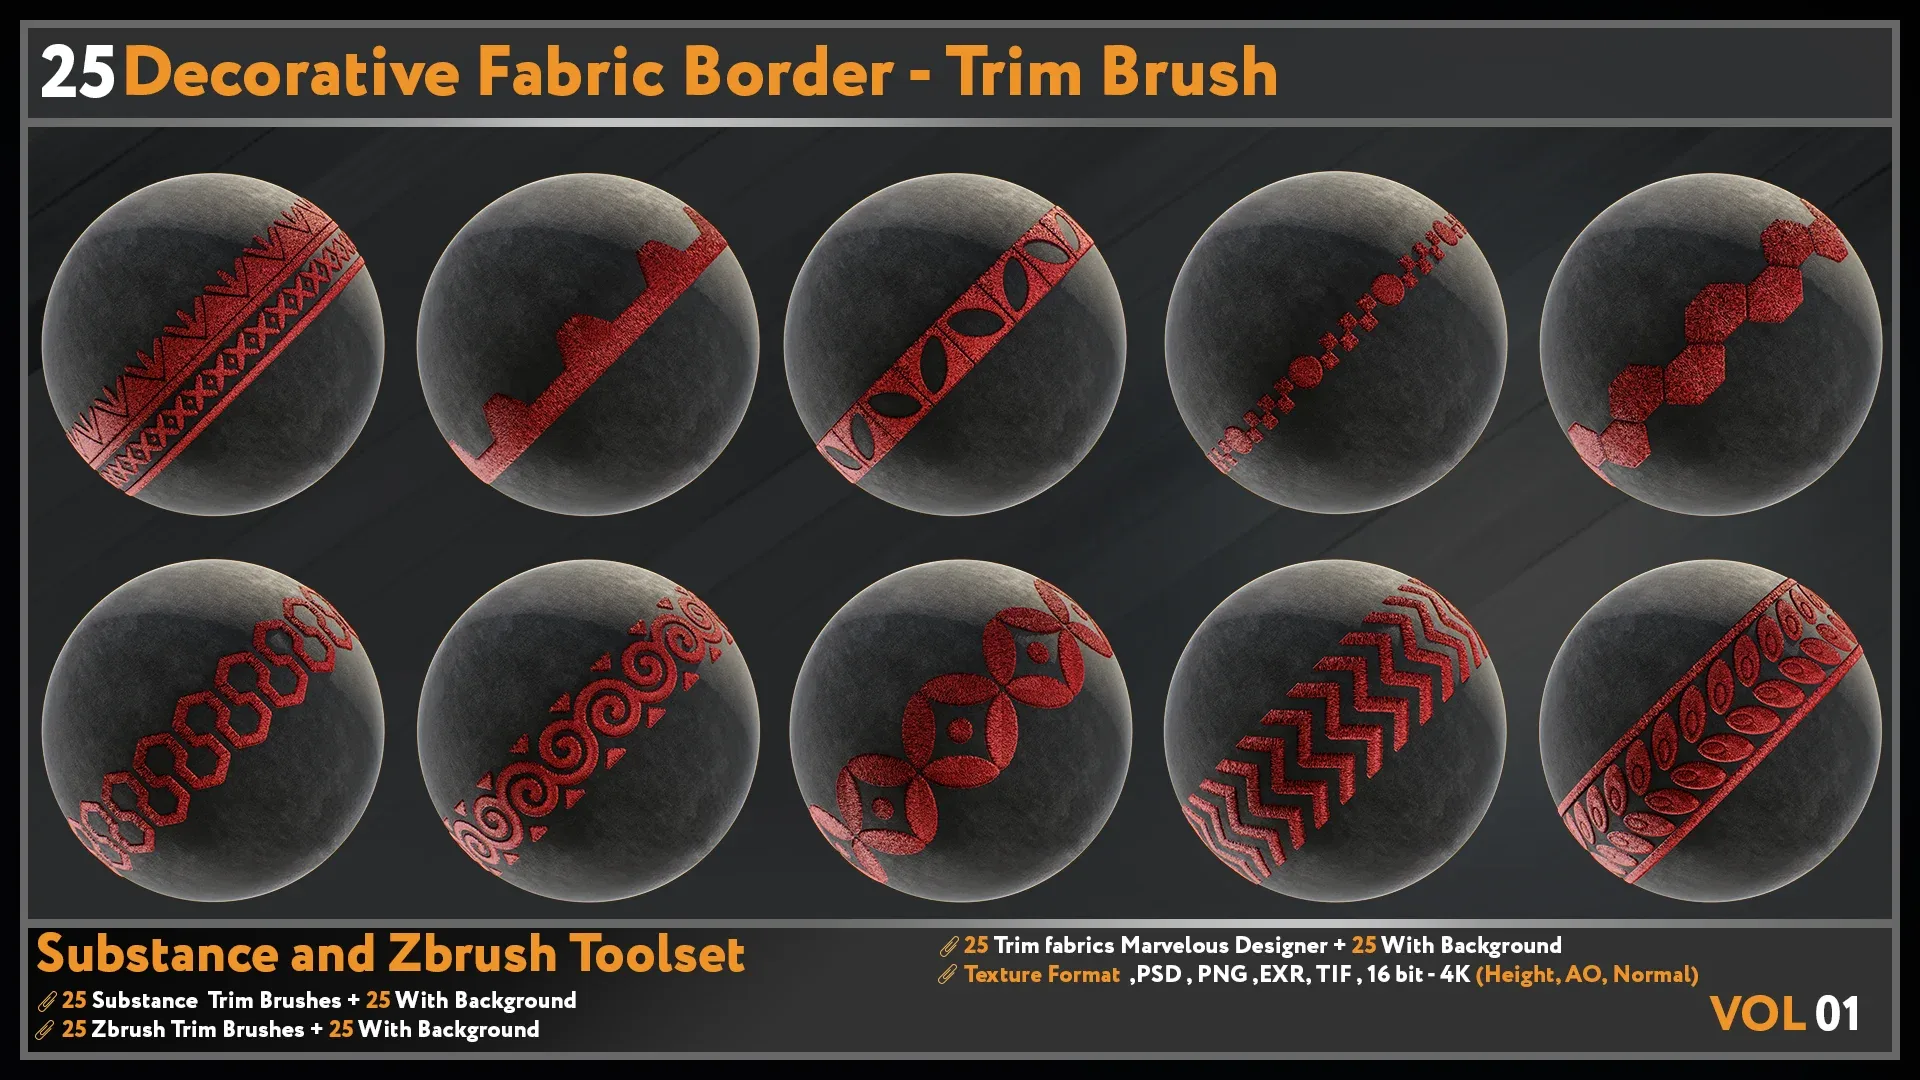 25 Decorative Fabric Border - Trim Brush-VOL 01